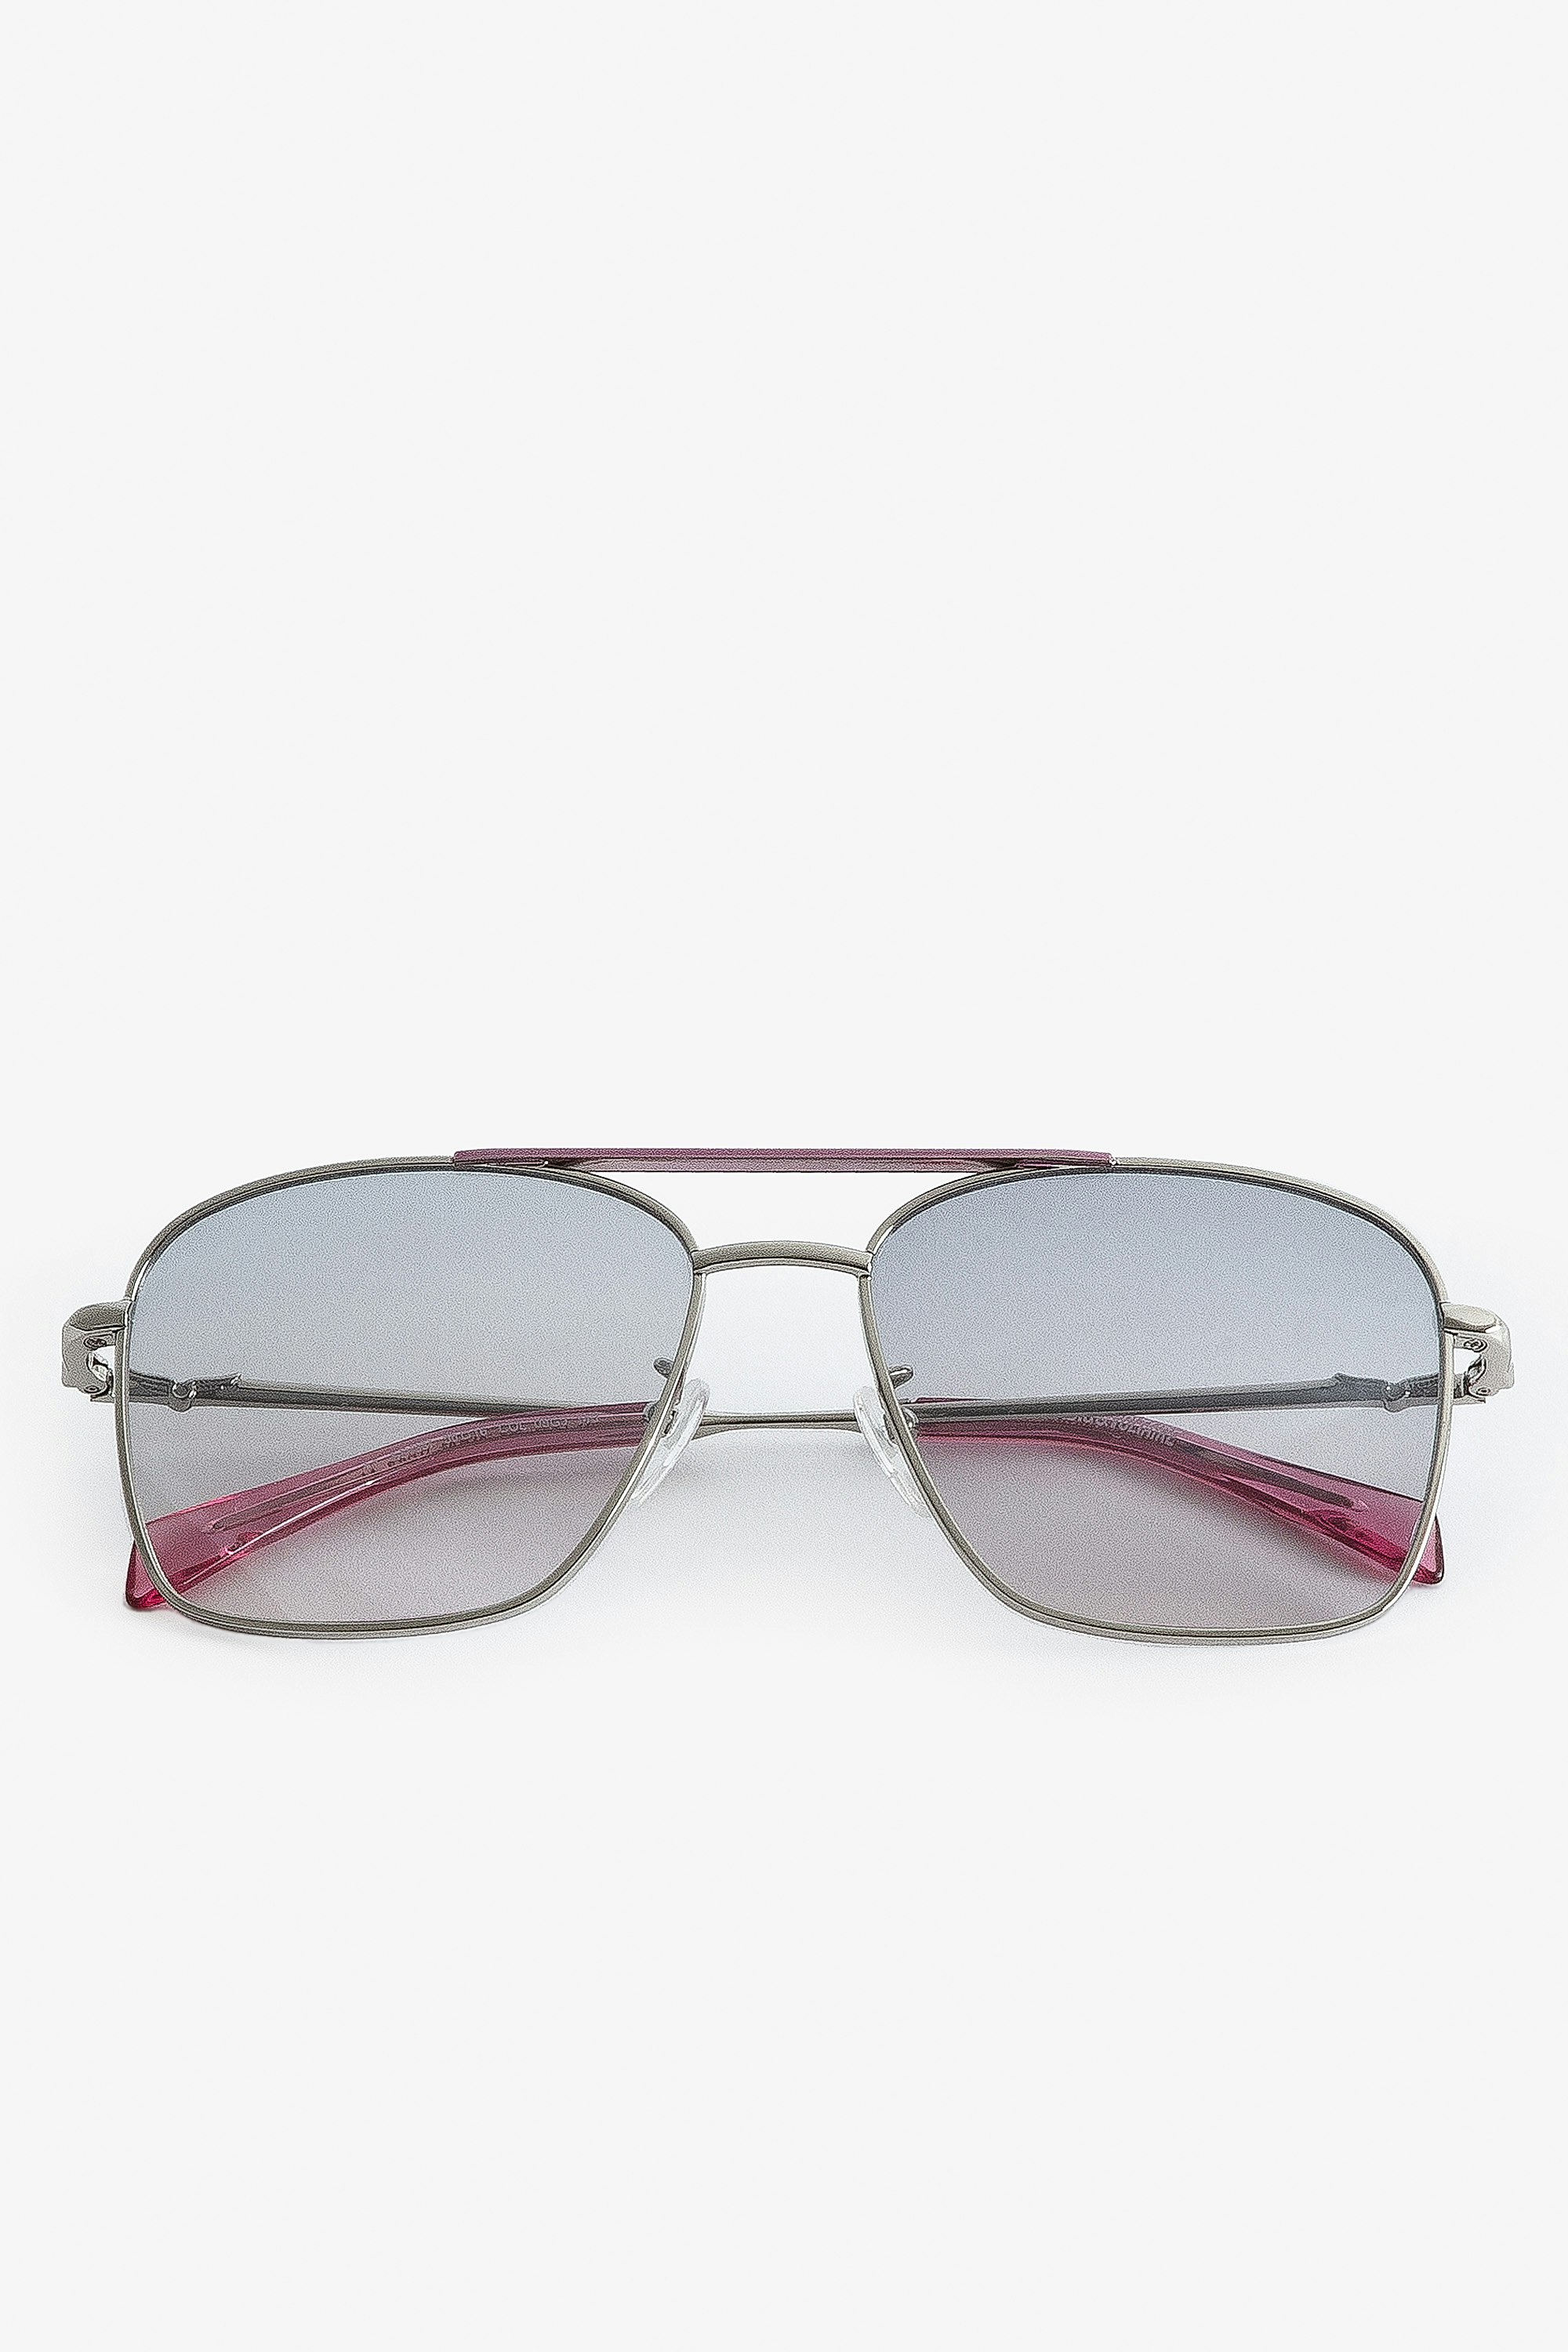 Aviator Wings Sunglasses - Unisex aviator sunglasses in pink metal with smoke glass.